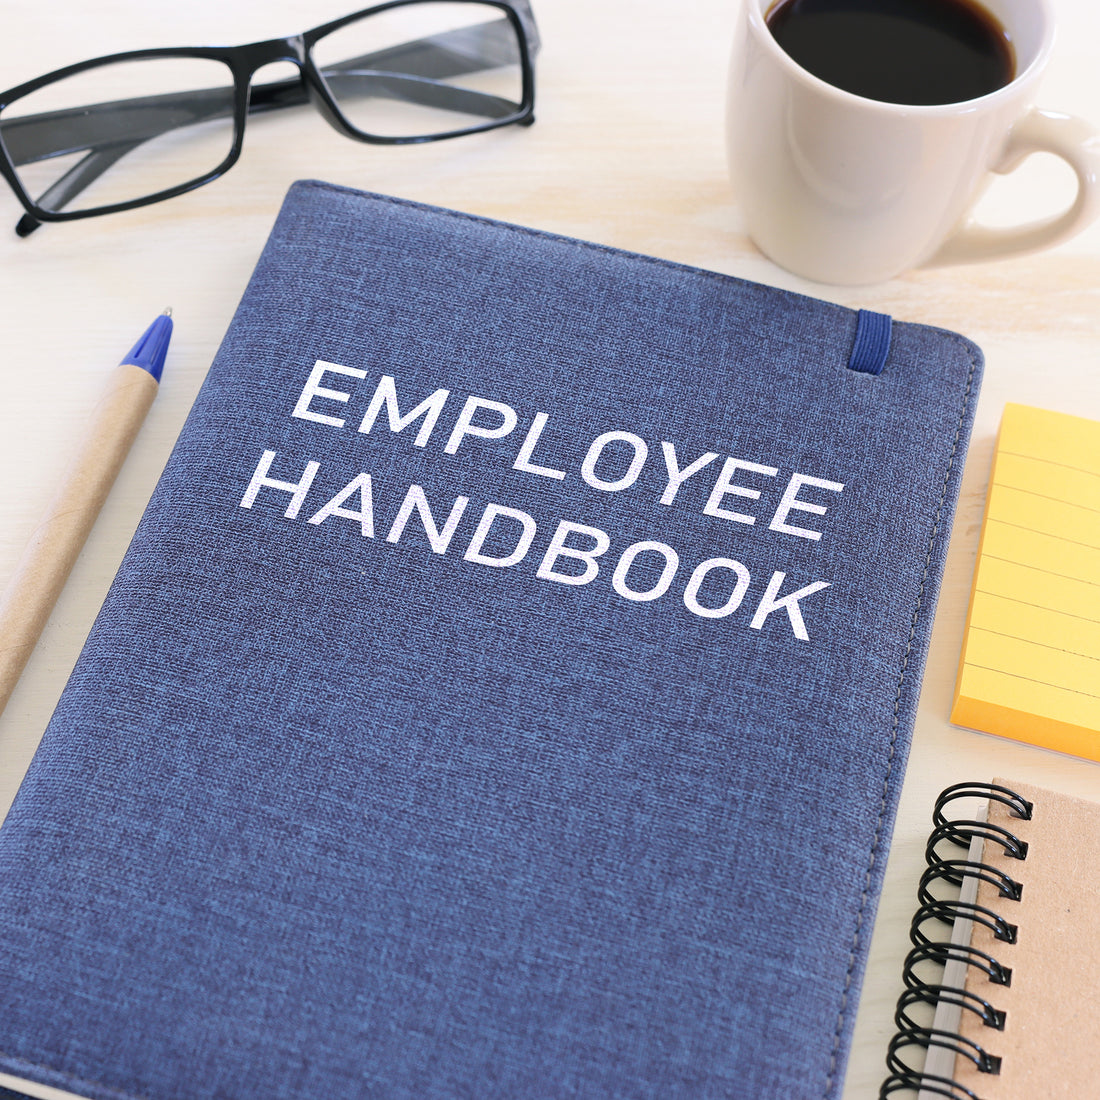 Company Handbook Case Study